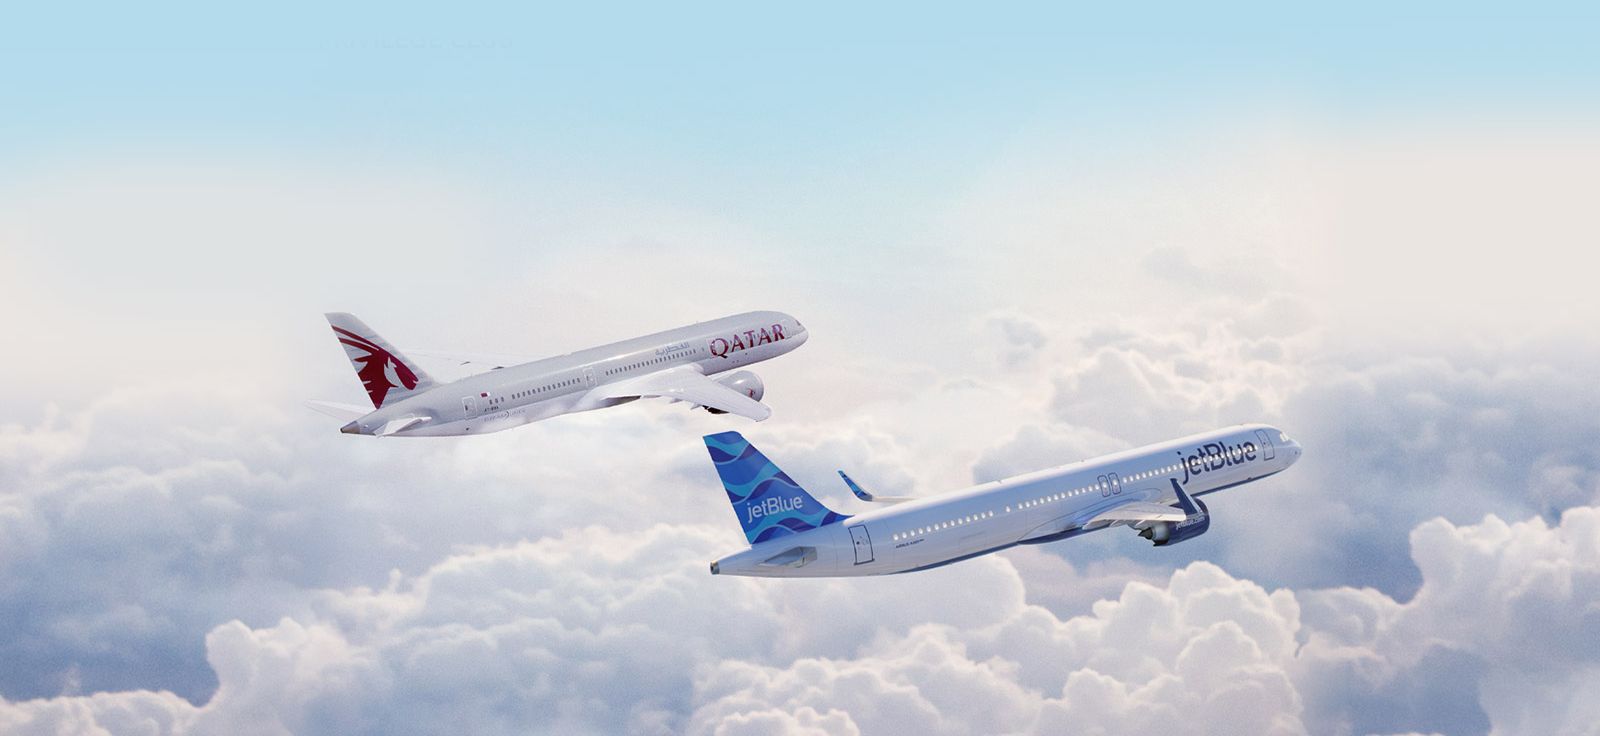 JetBlue and Qatar Airways have begun providing award ticket redemptions